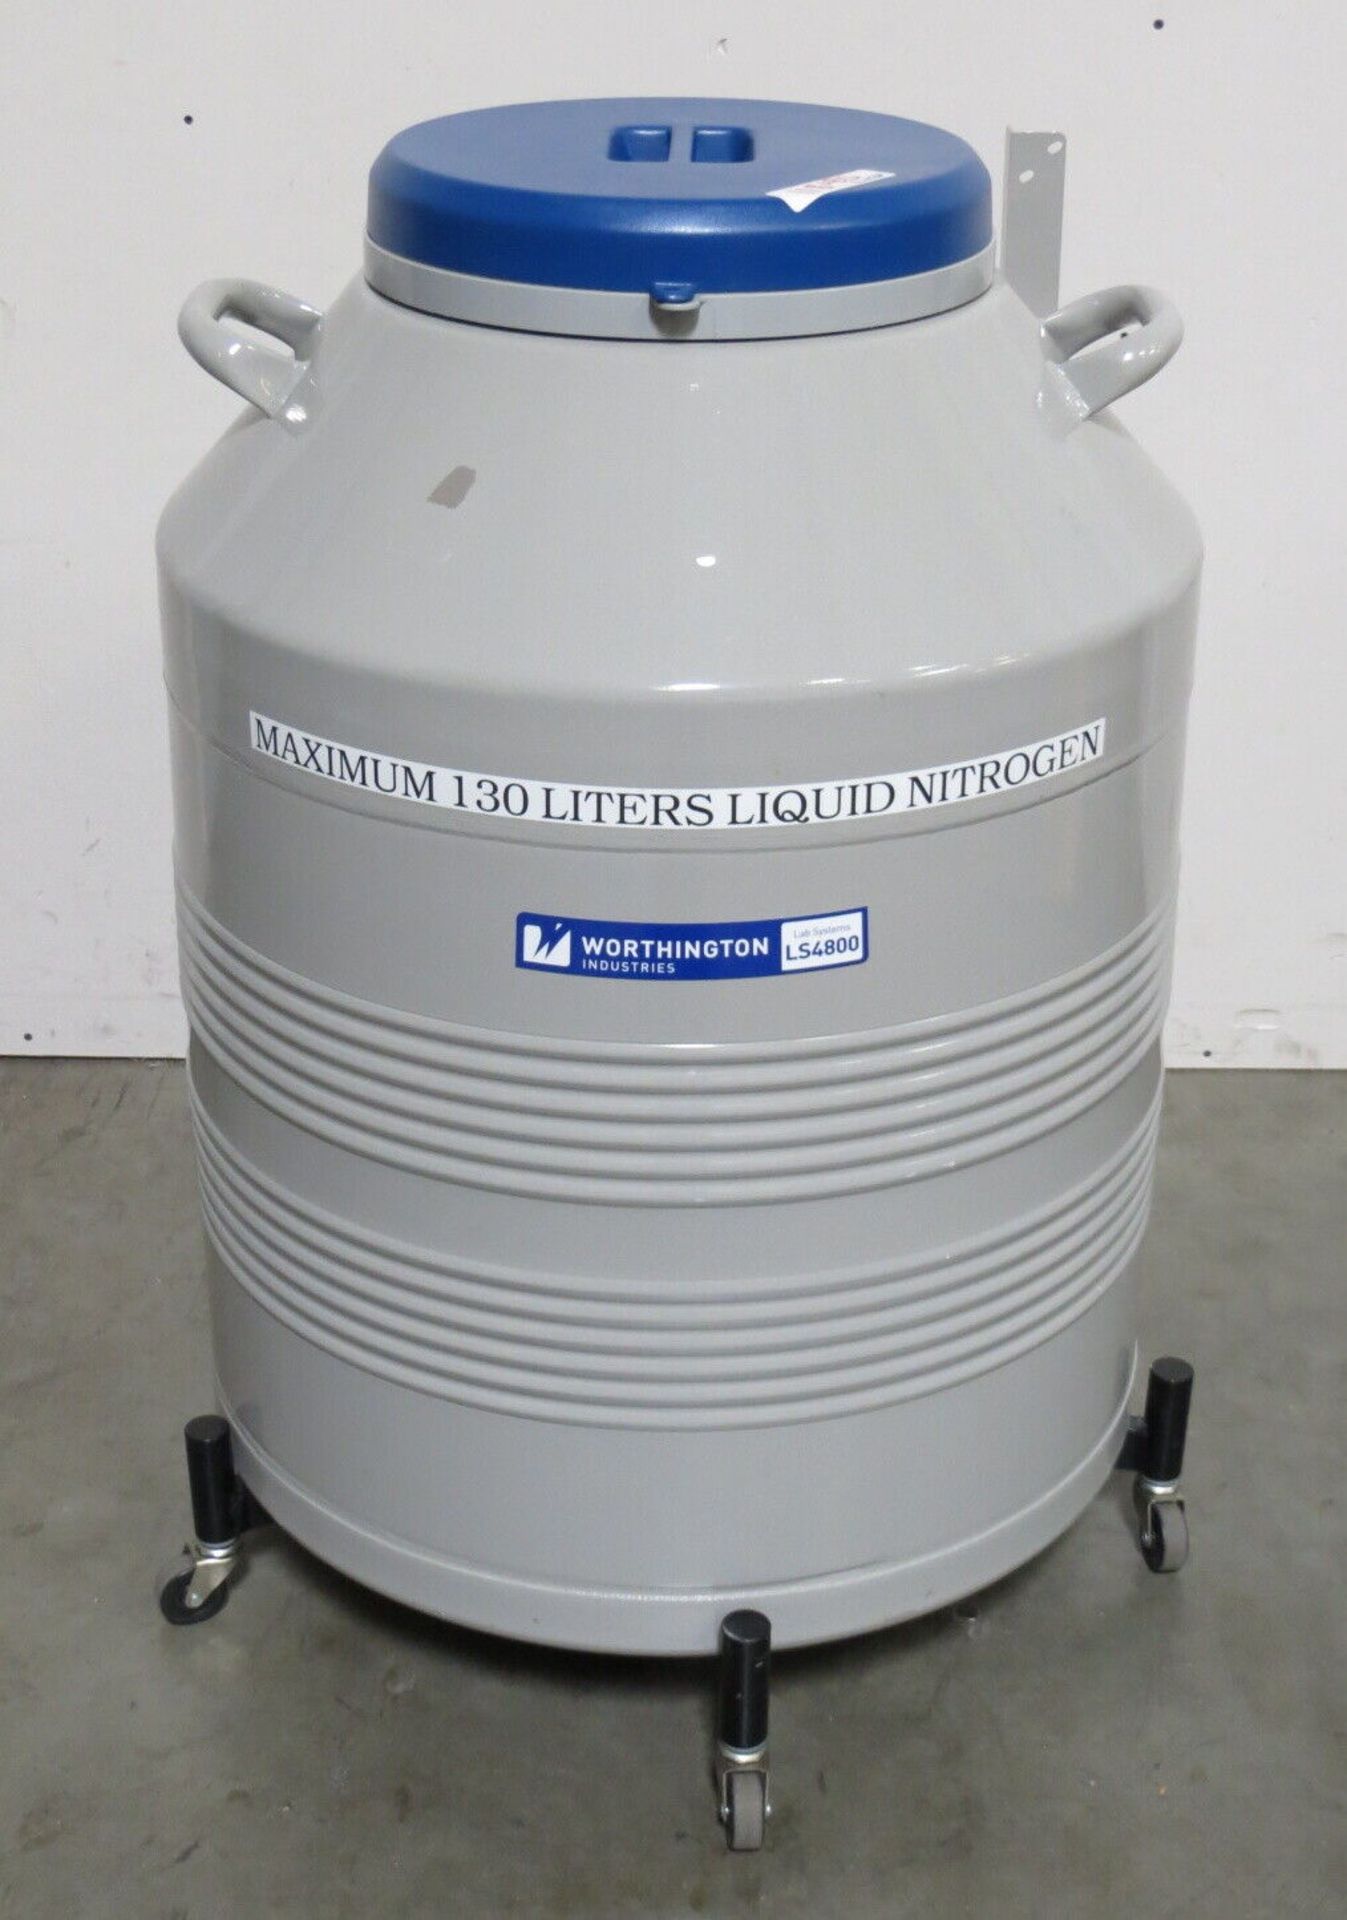 Worthington Industries LS4800 Liquid Nitrogen LN2 Storage Tank